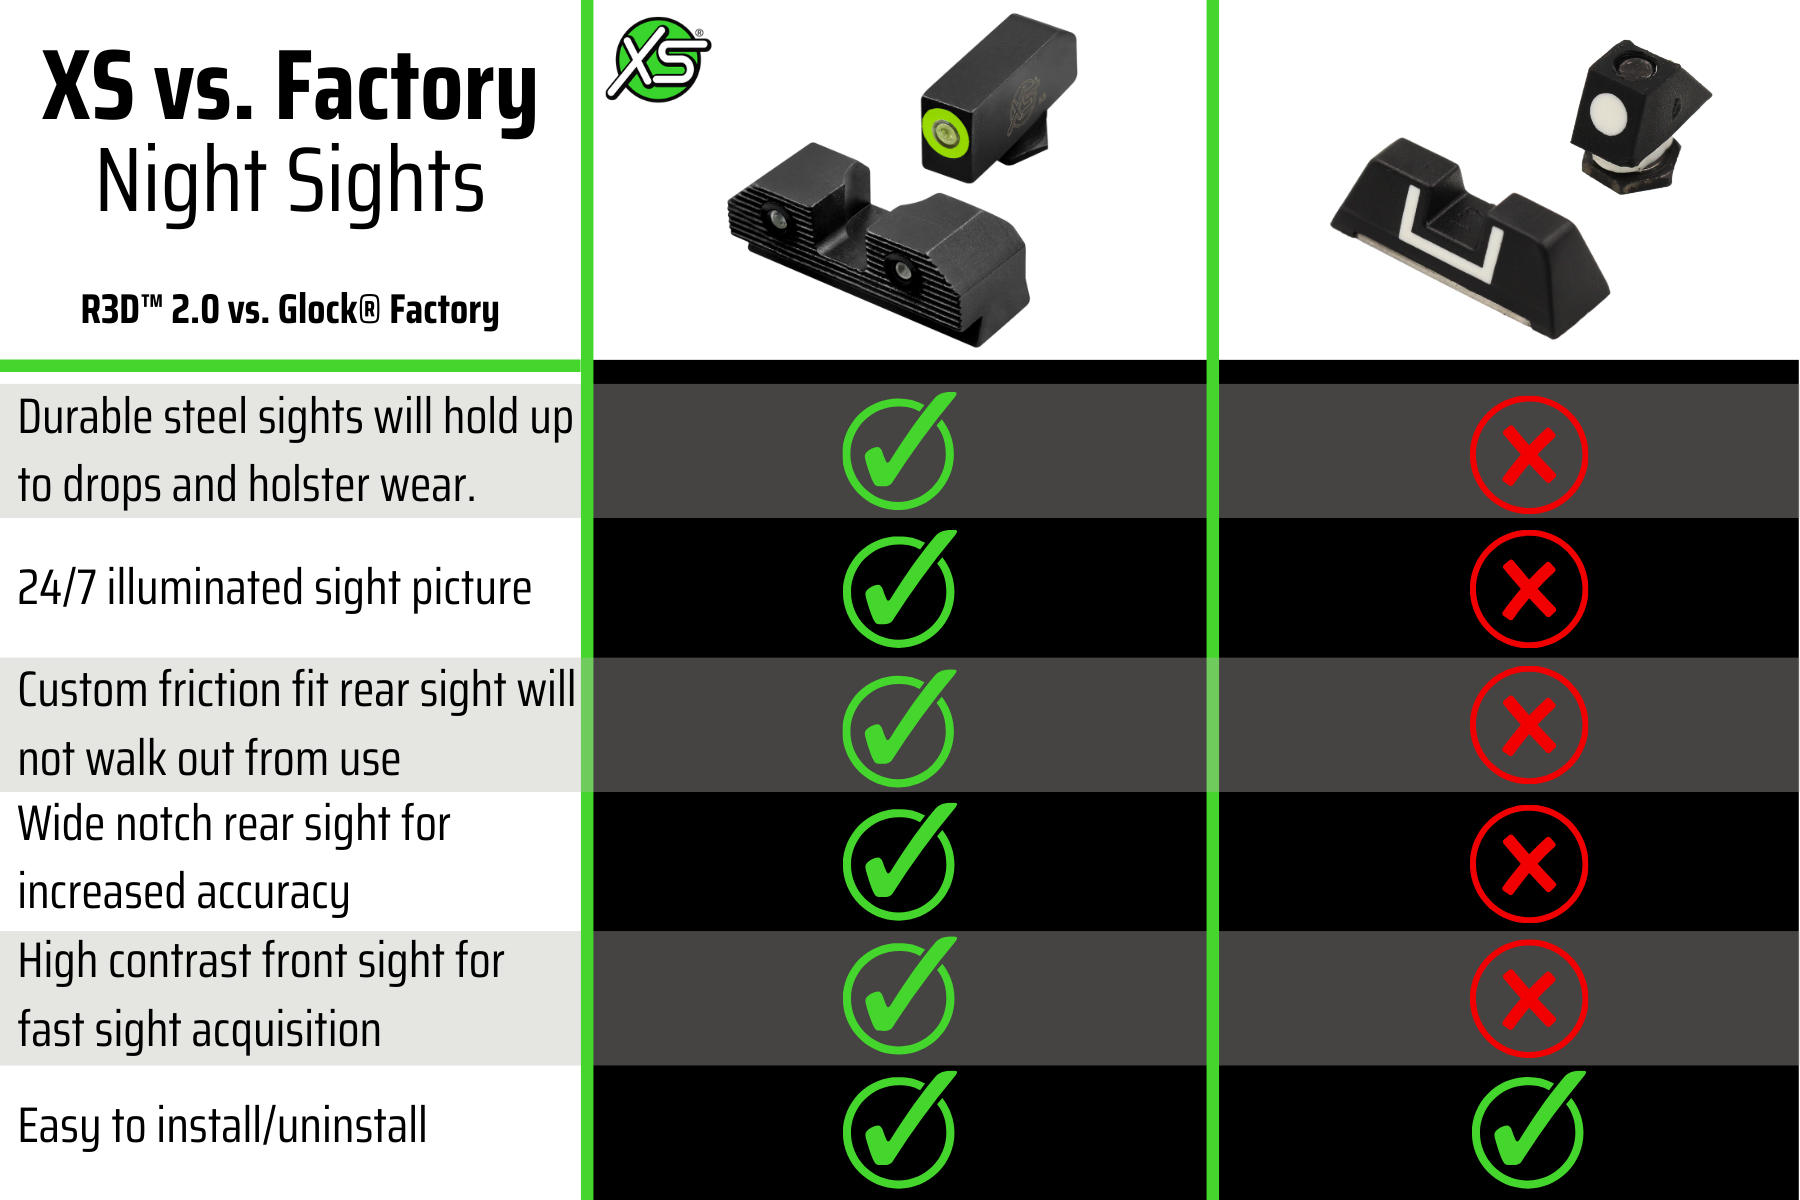 R3D 2.0 tritium night sights vs. Glock Factory sights